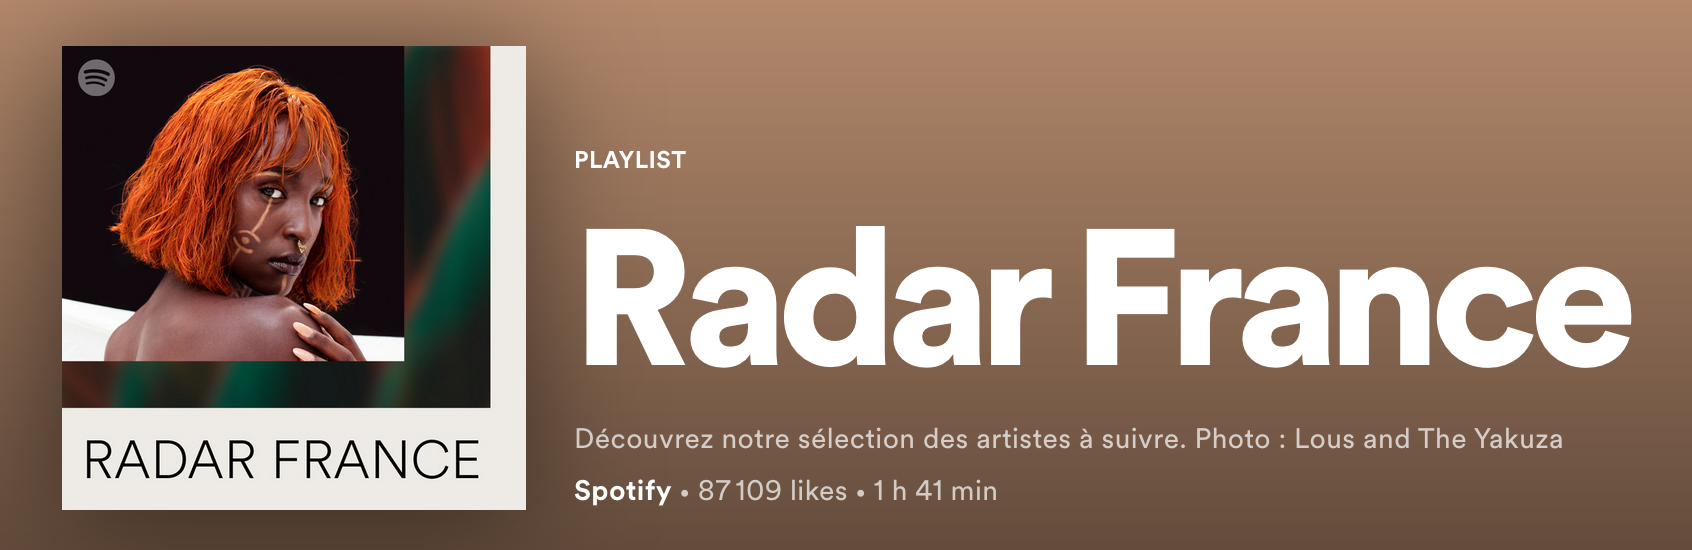 Spotify lance le Hub Radar